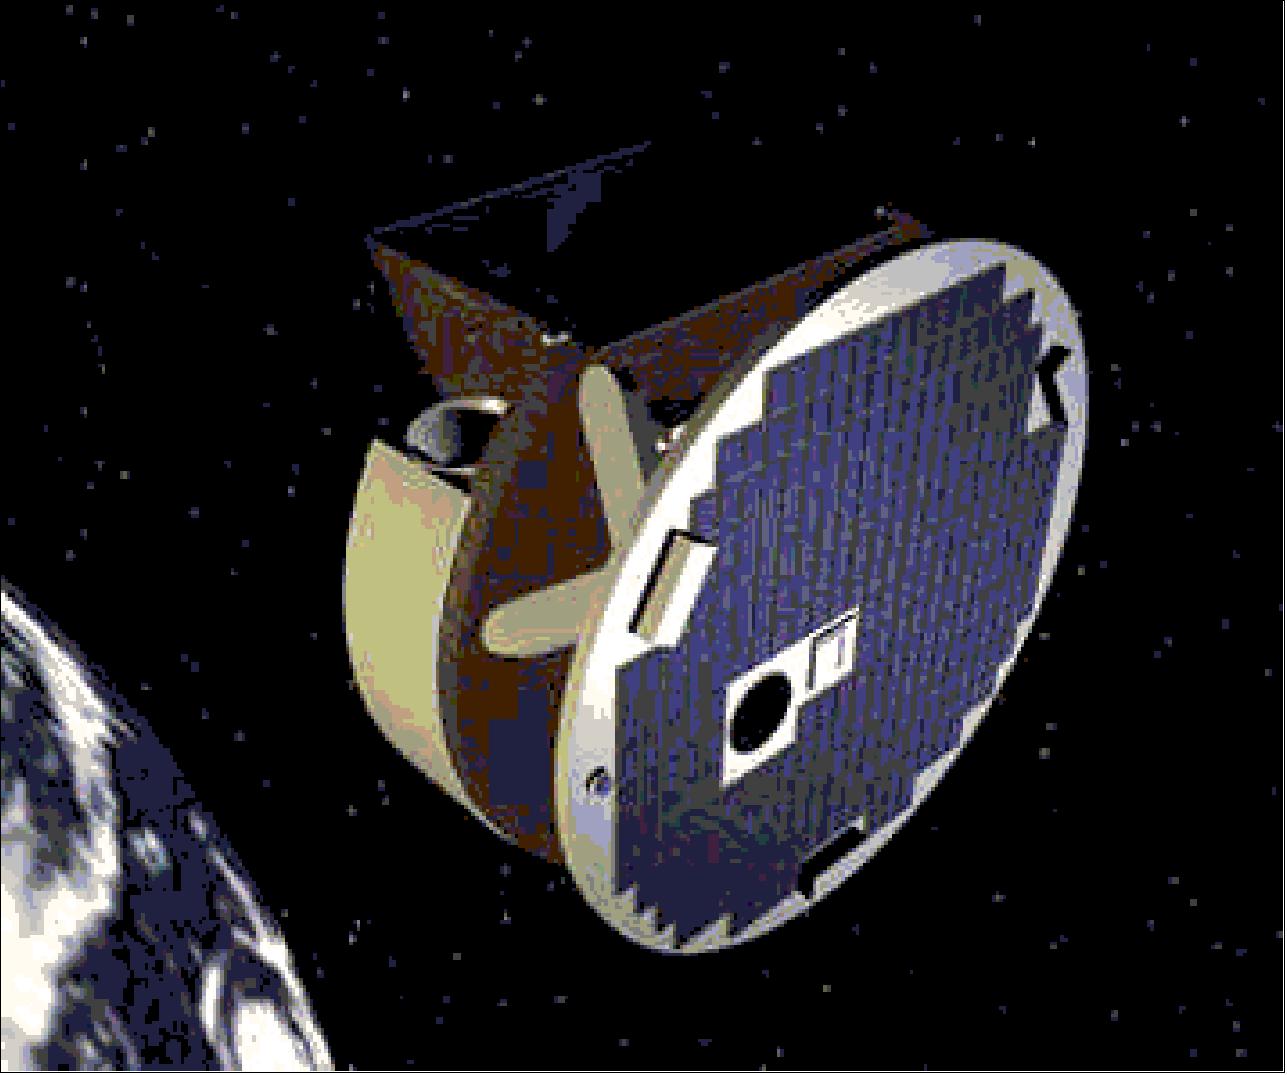 Figure 2: Artist's rendering of the SciSat spacecraft (image credit: Bristol Aerospace)